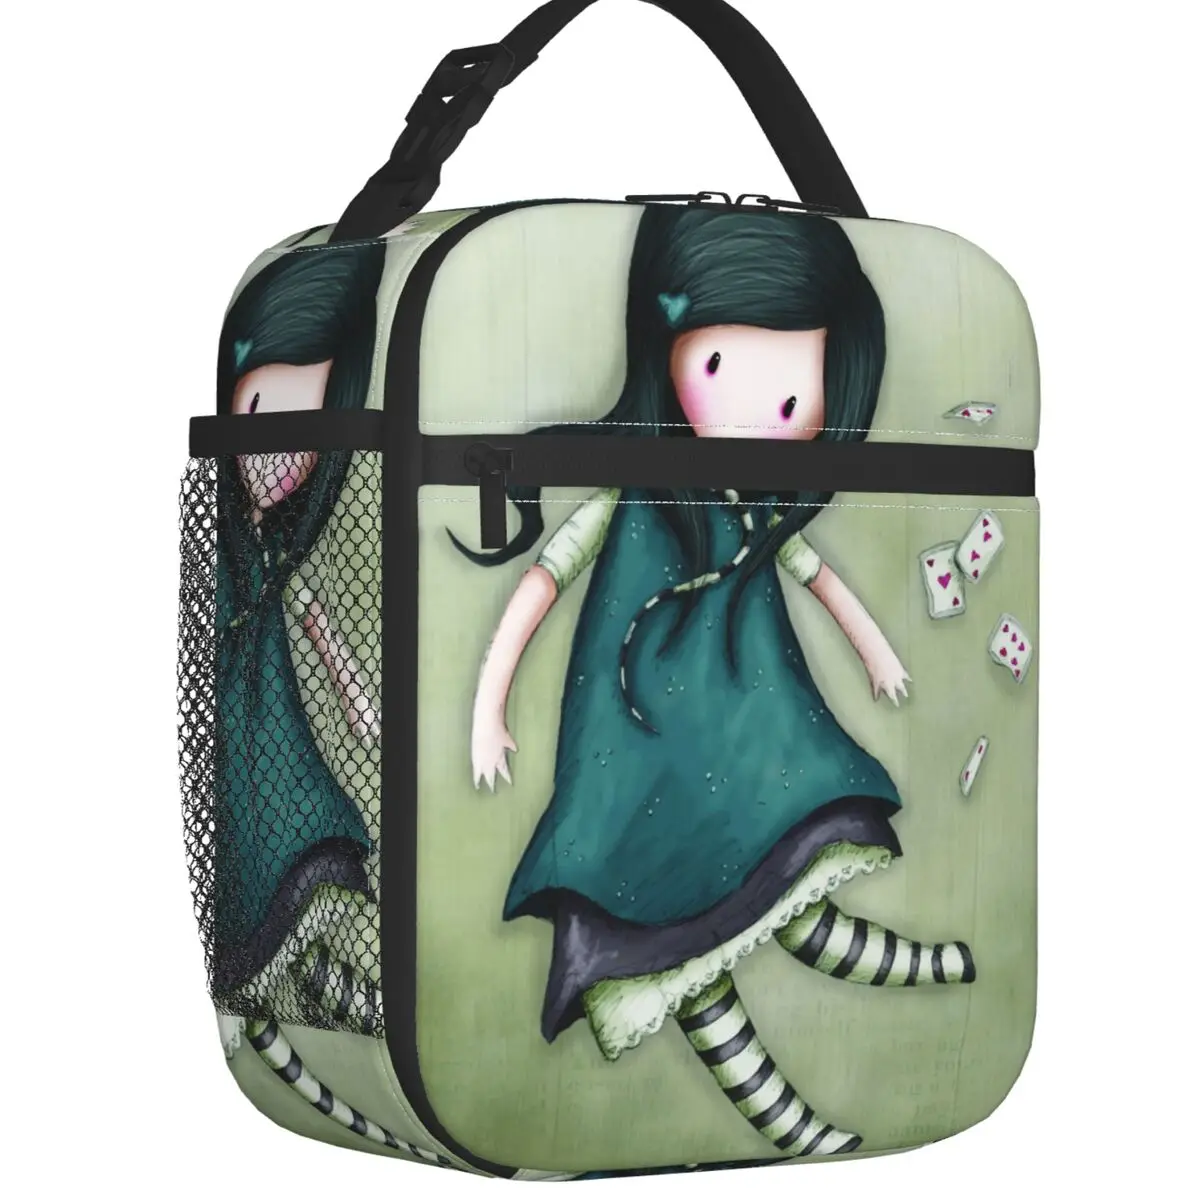 Santoro Gorjuss Insulated Lunch Bag for Women Portable Cartoon Girl Thermal Cooler Bento Box Office Picnic Travel